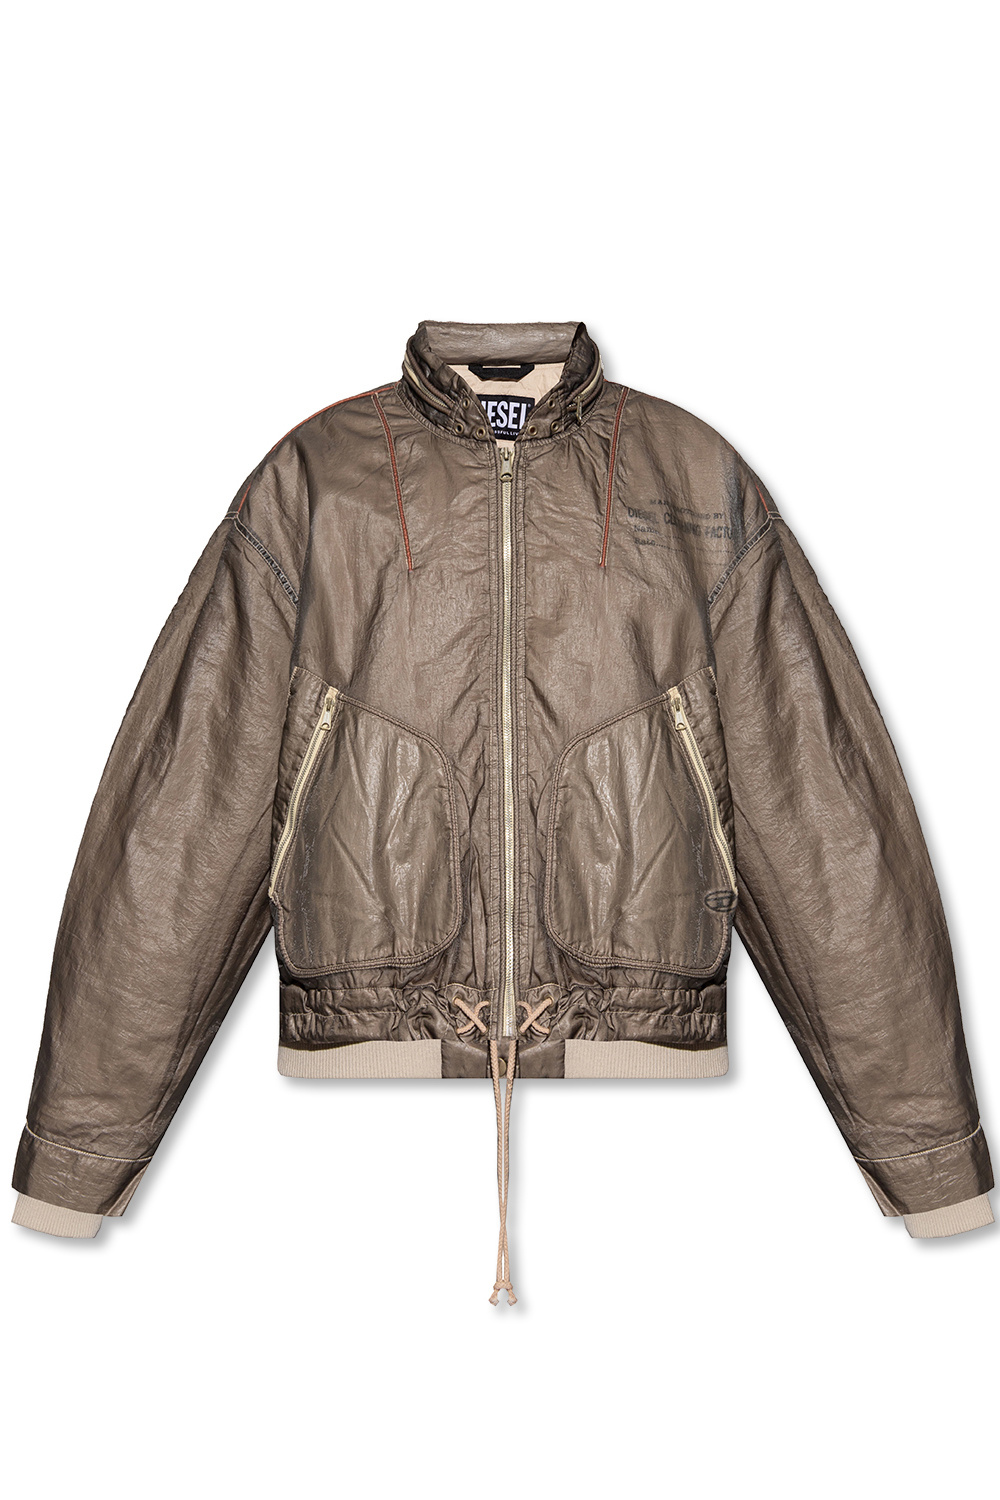 LEEy-world Jackets for Men Slim Fit Lightweight Jacket Casual Bomber Jacket  Sportswear Brown,M